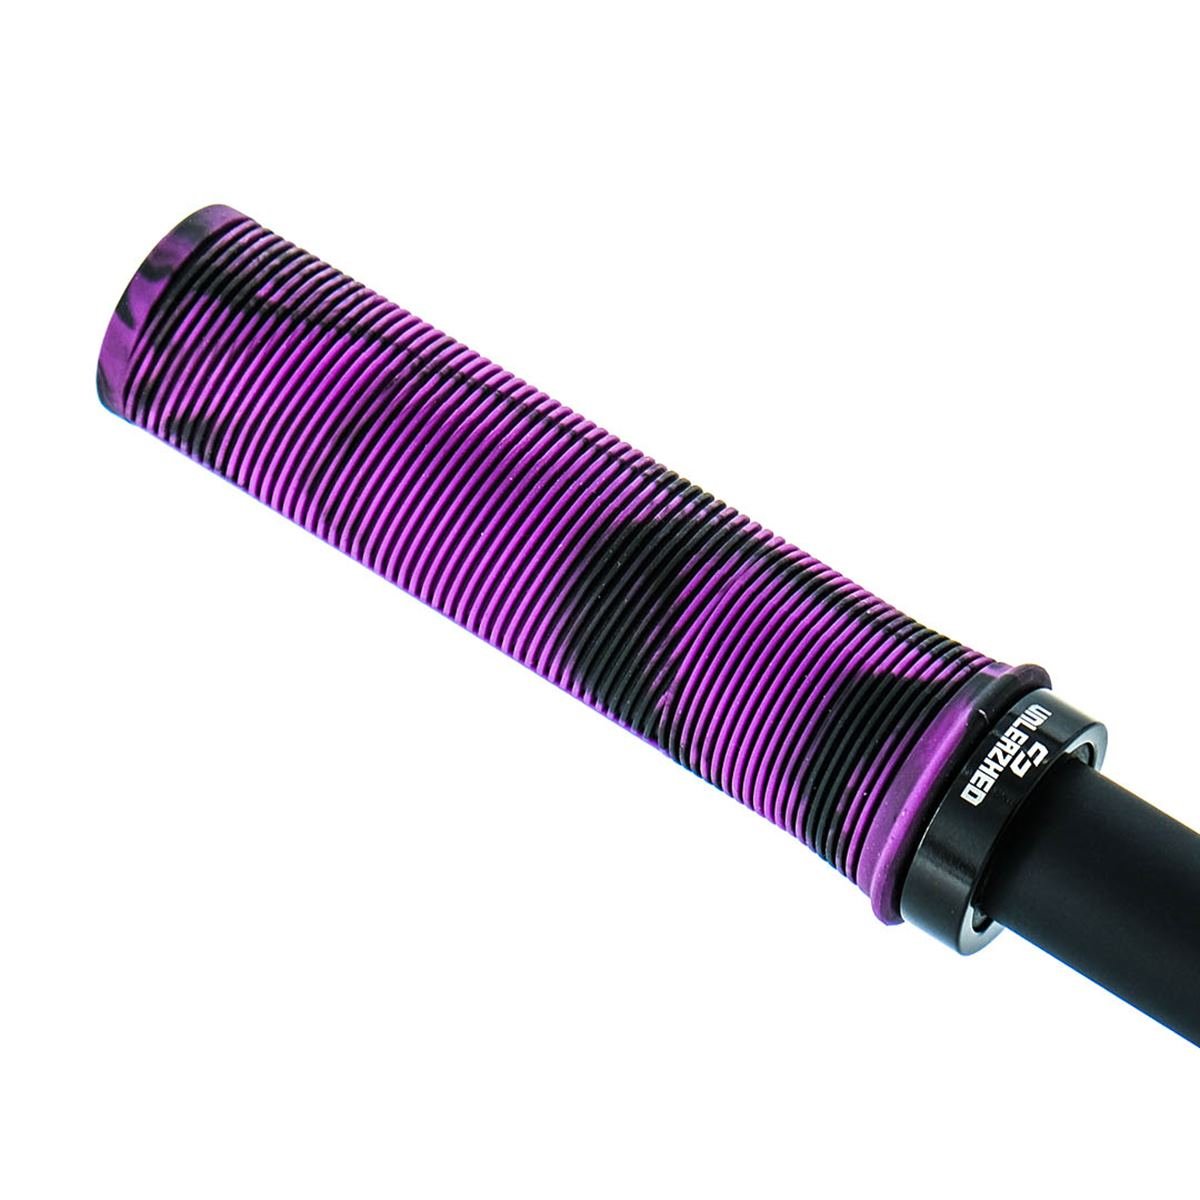 Unleazhed Grips VTT G1 Violet/Noir, 135 x 31 mm